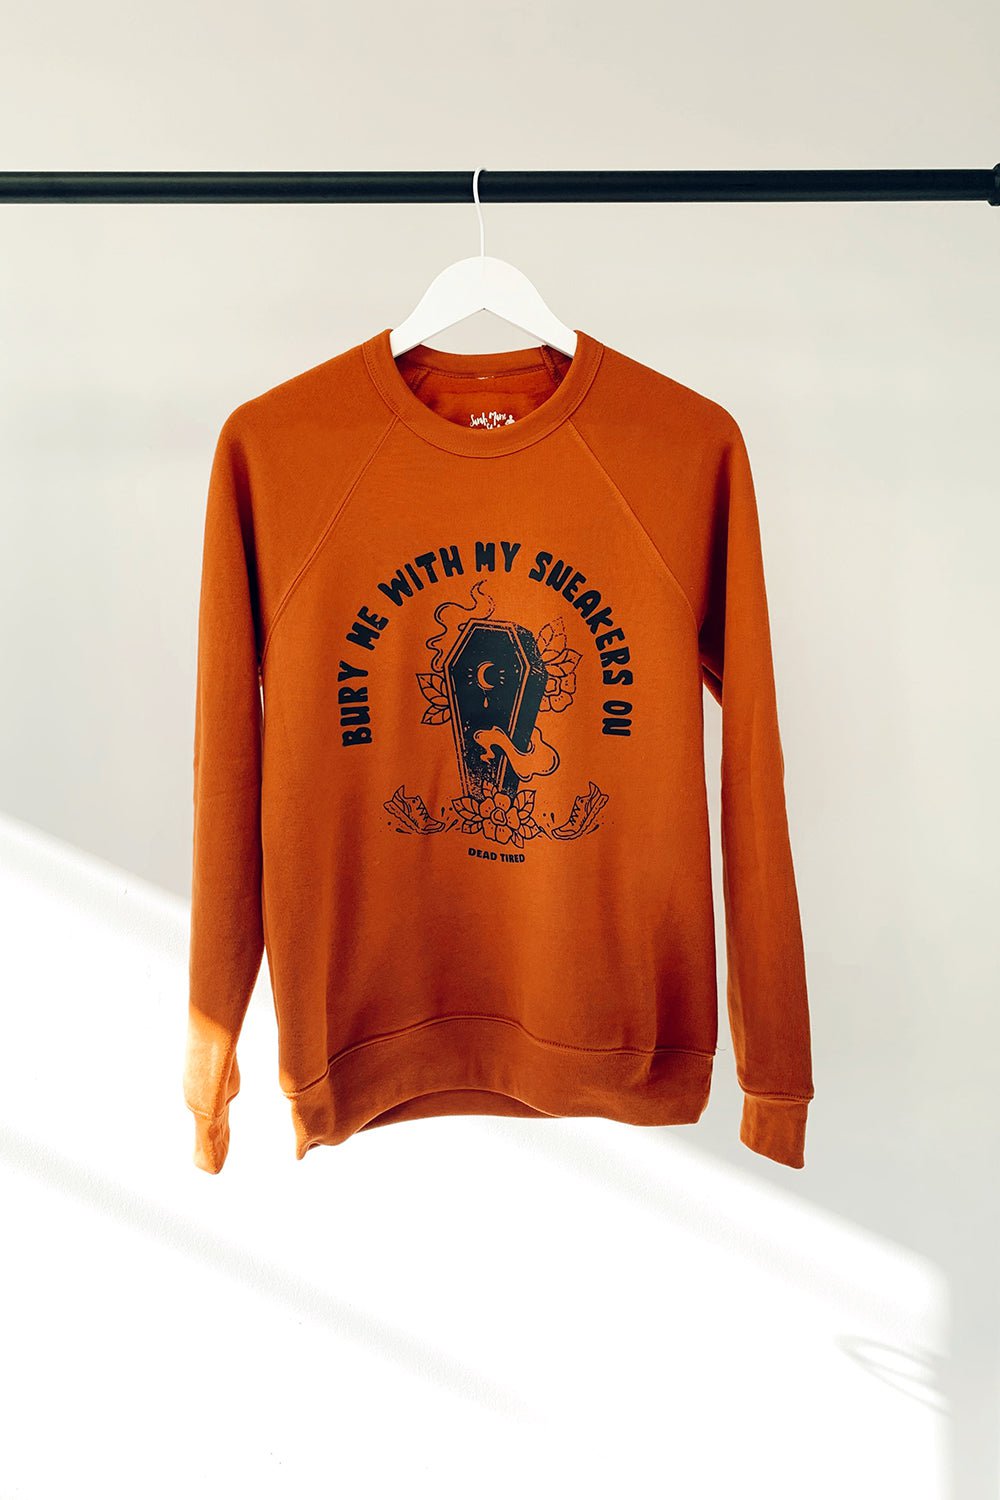 Sarah Marie Design Studio Sweatshirt XSmall / Burnt Orange Bury Me With My Sneakers On Sweatshirt